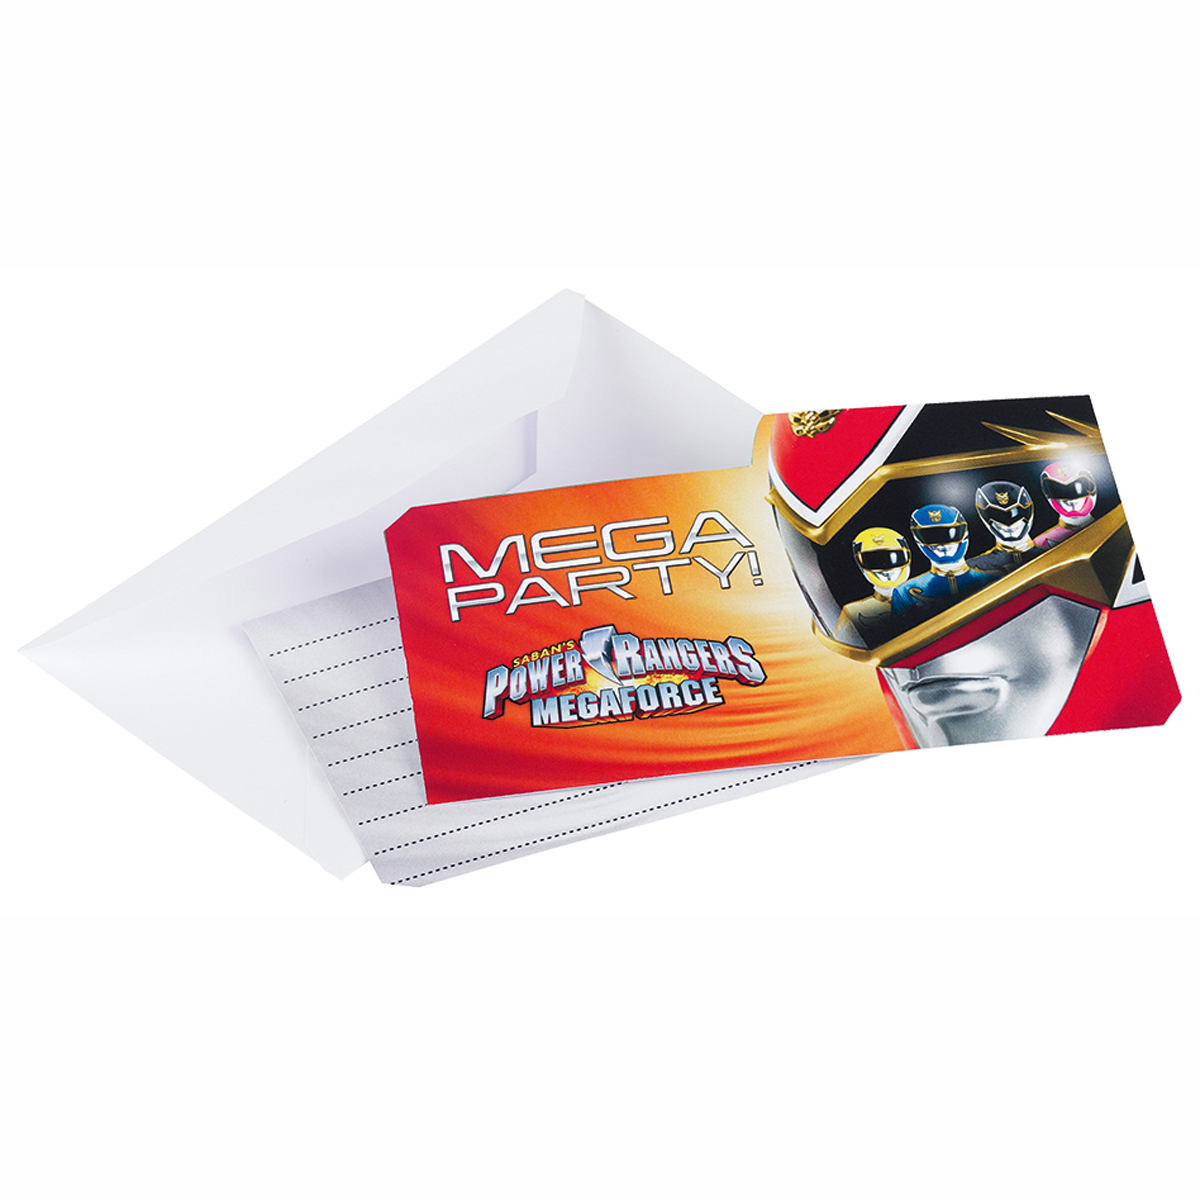 Power Ranger Mega Force Invitation Cards And Envelopes 6pcs Party Accessories - Party Centre